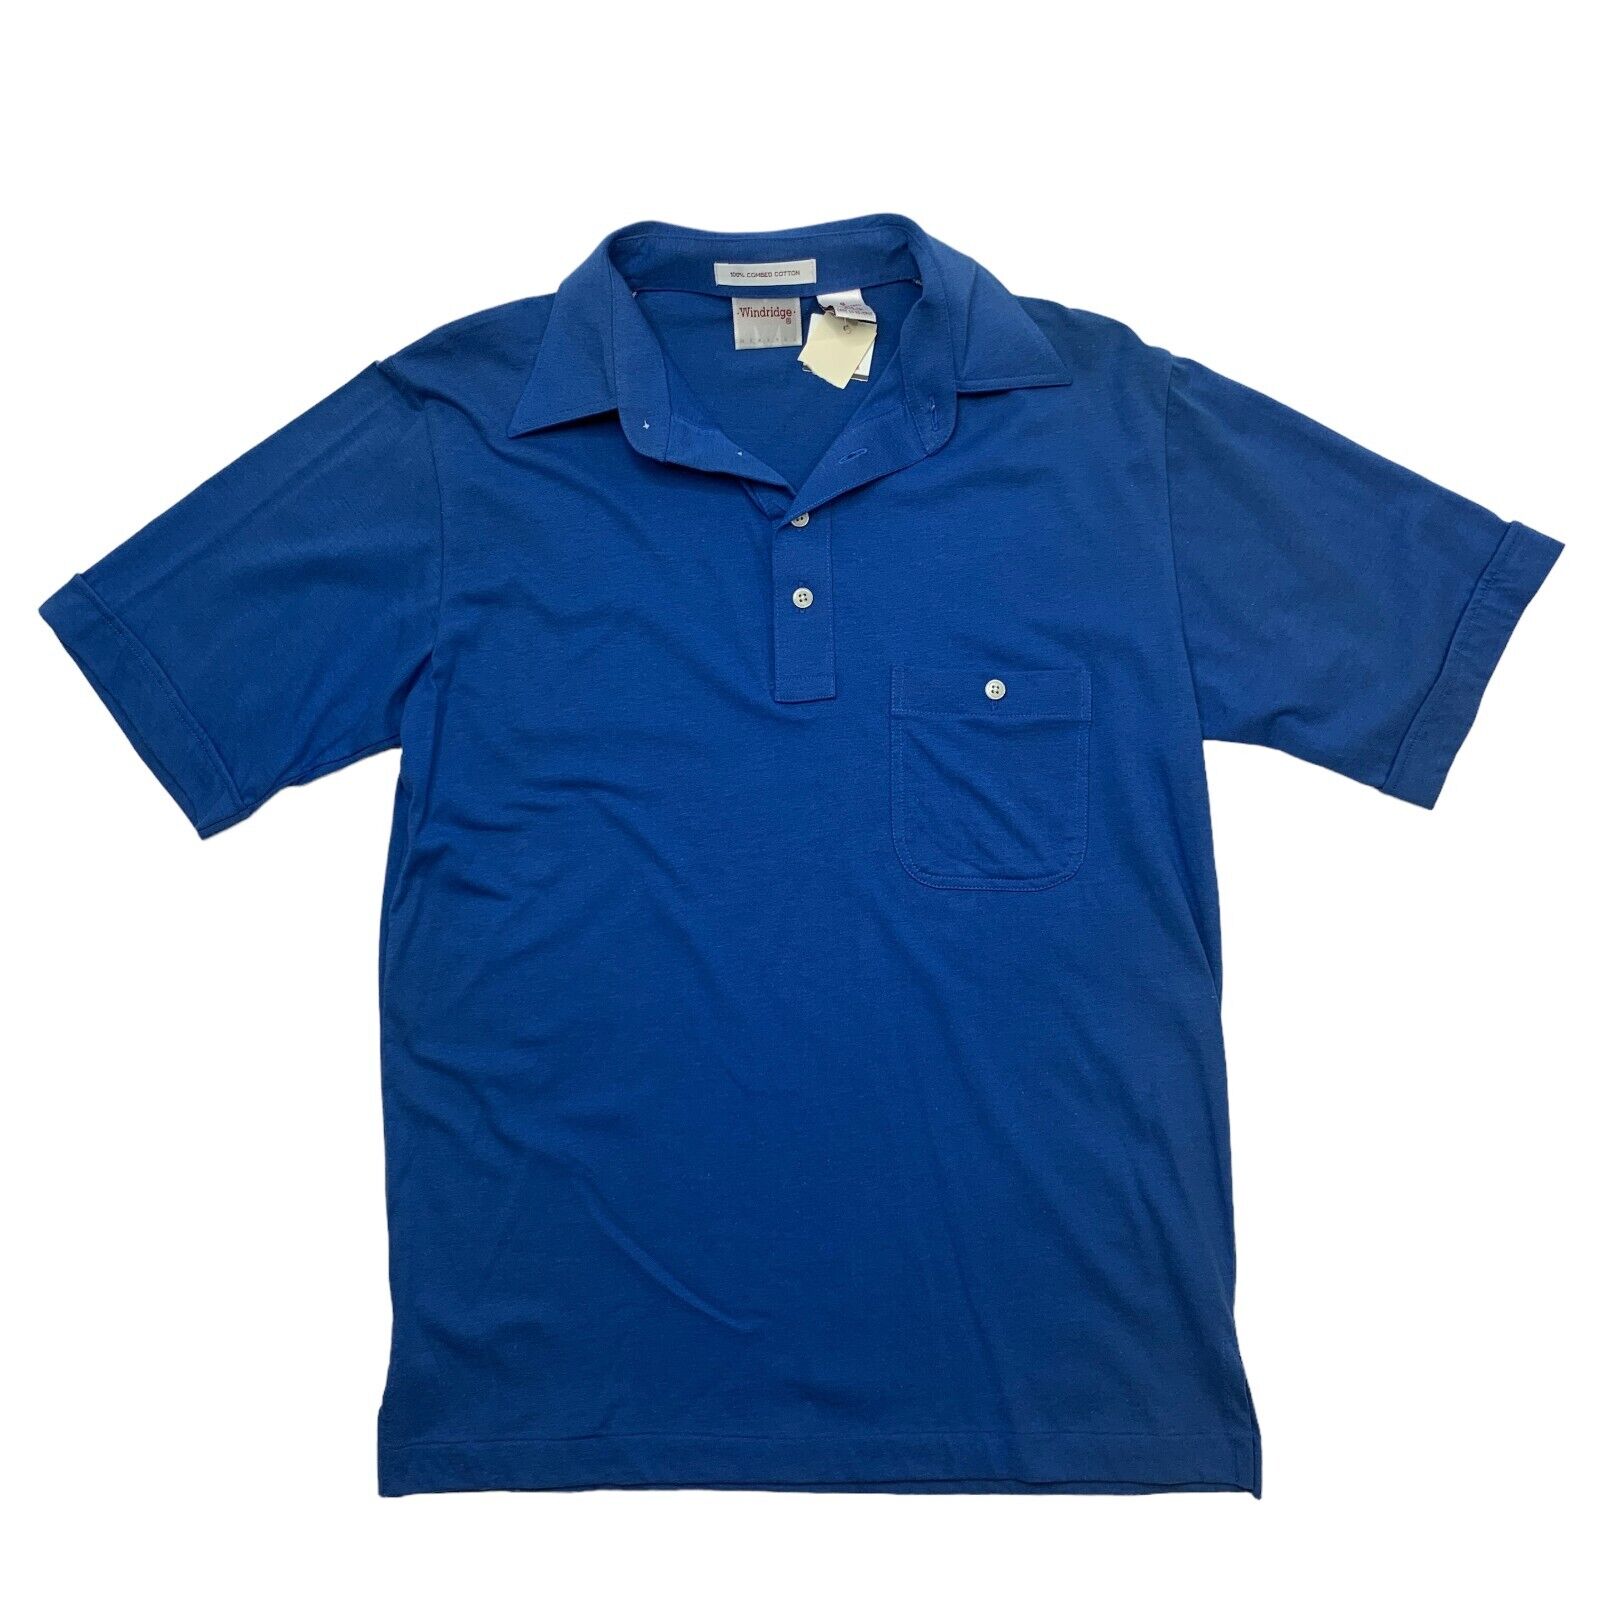 Windridge Polo Shirt Mens S Small Pacific Blue Combed Cotton Short Sleeve  New